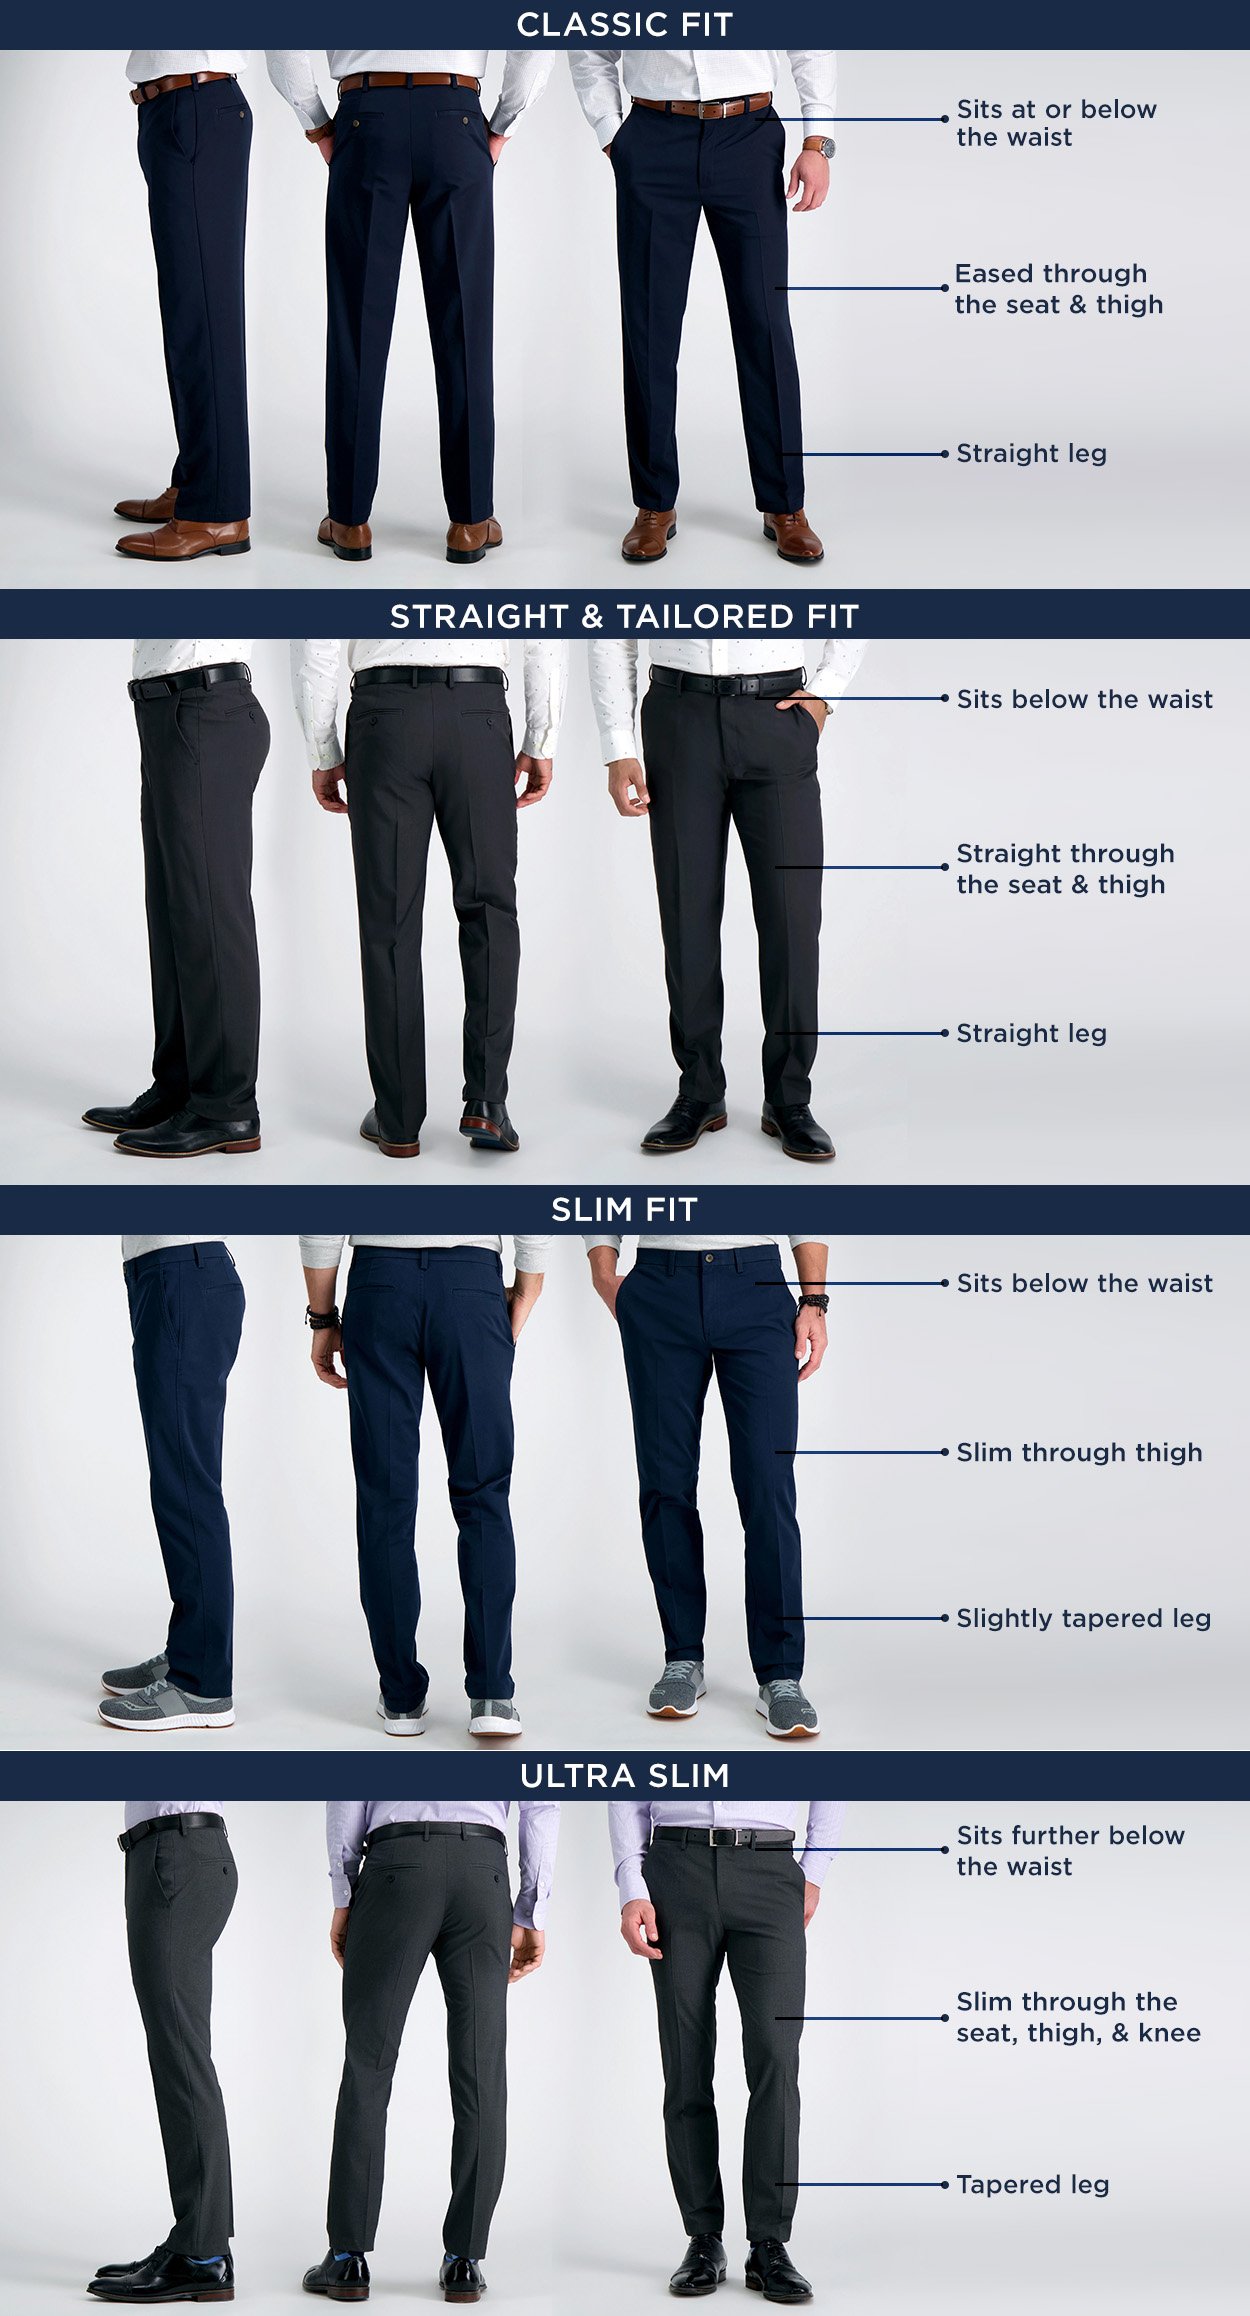 Size Chart | Men's Clothing Size Chart | Haggar